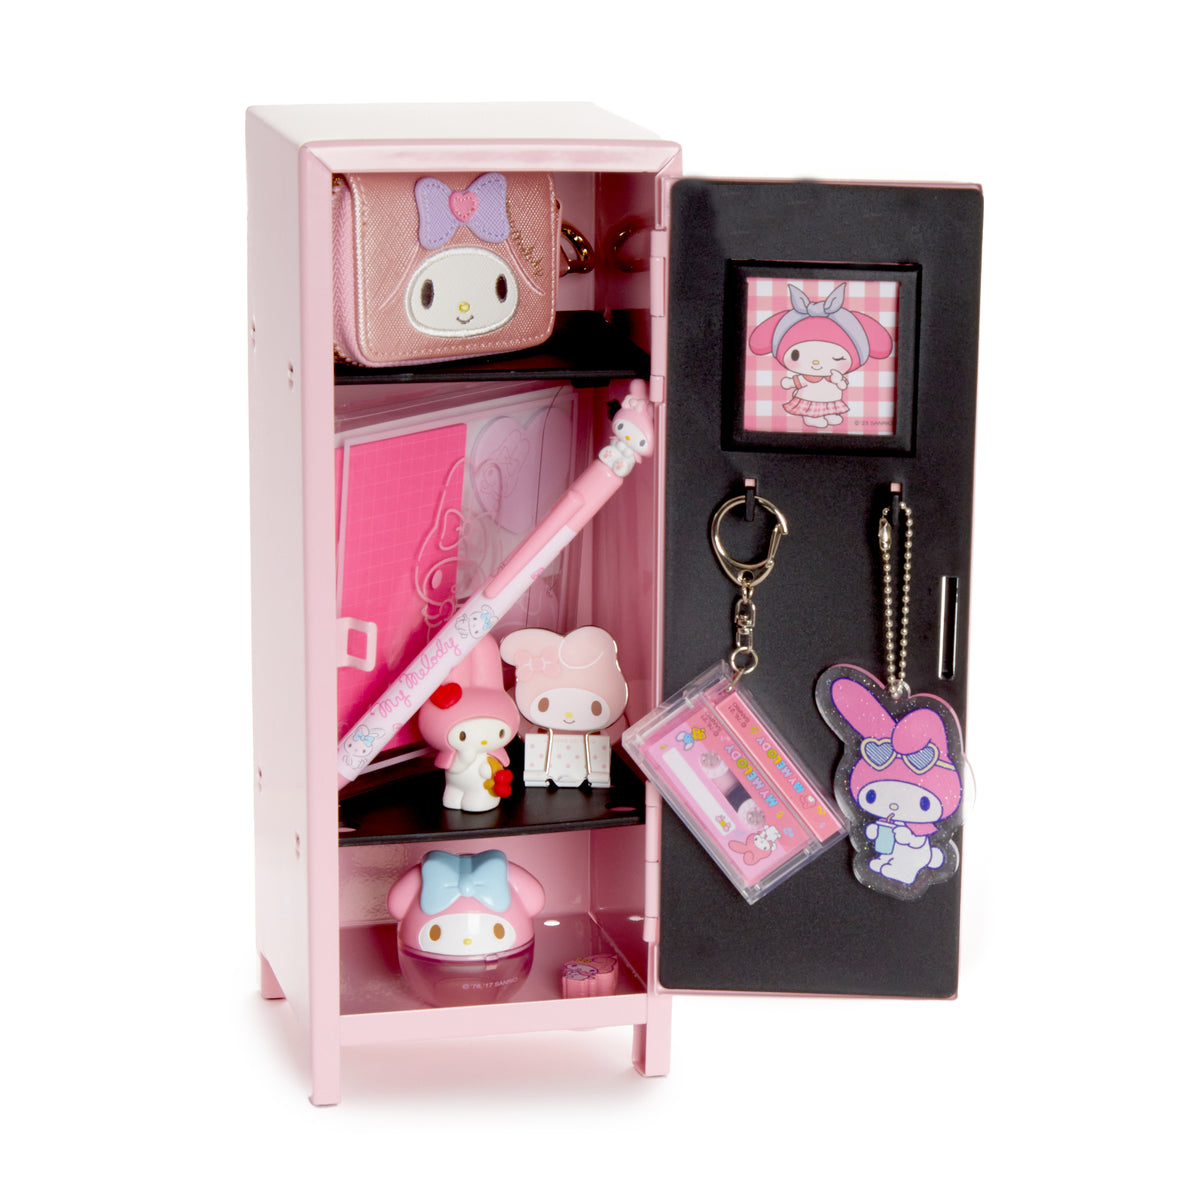 My Melody Customizable Mini Locker Home Goods Global Original   